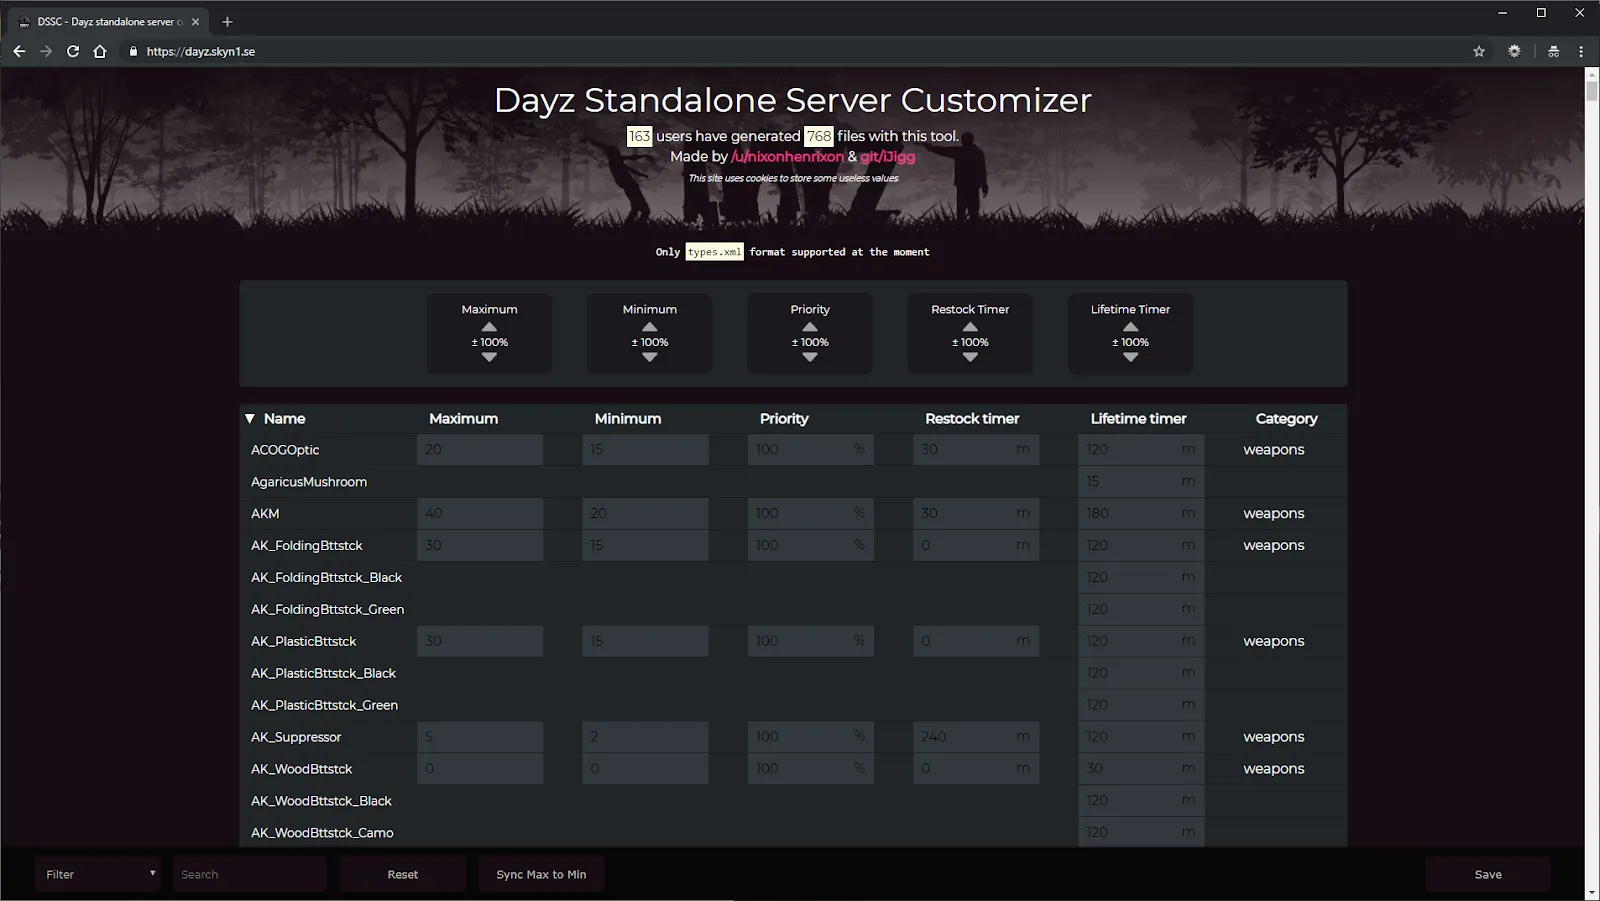 Server customization for DayZ